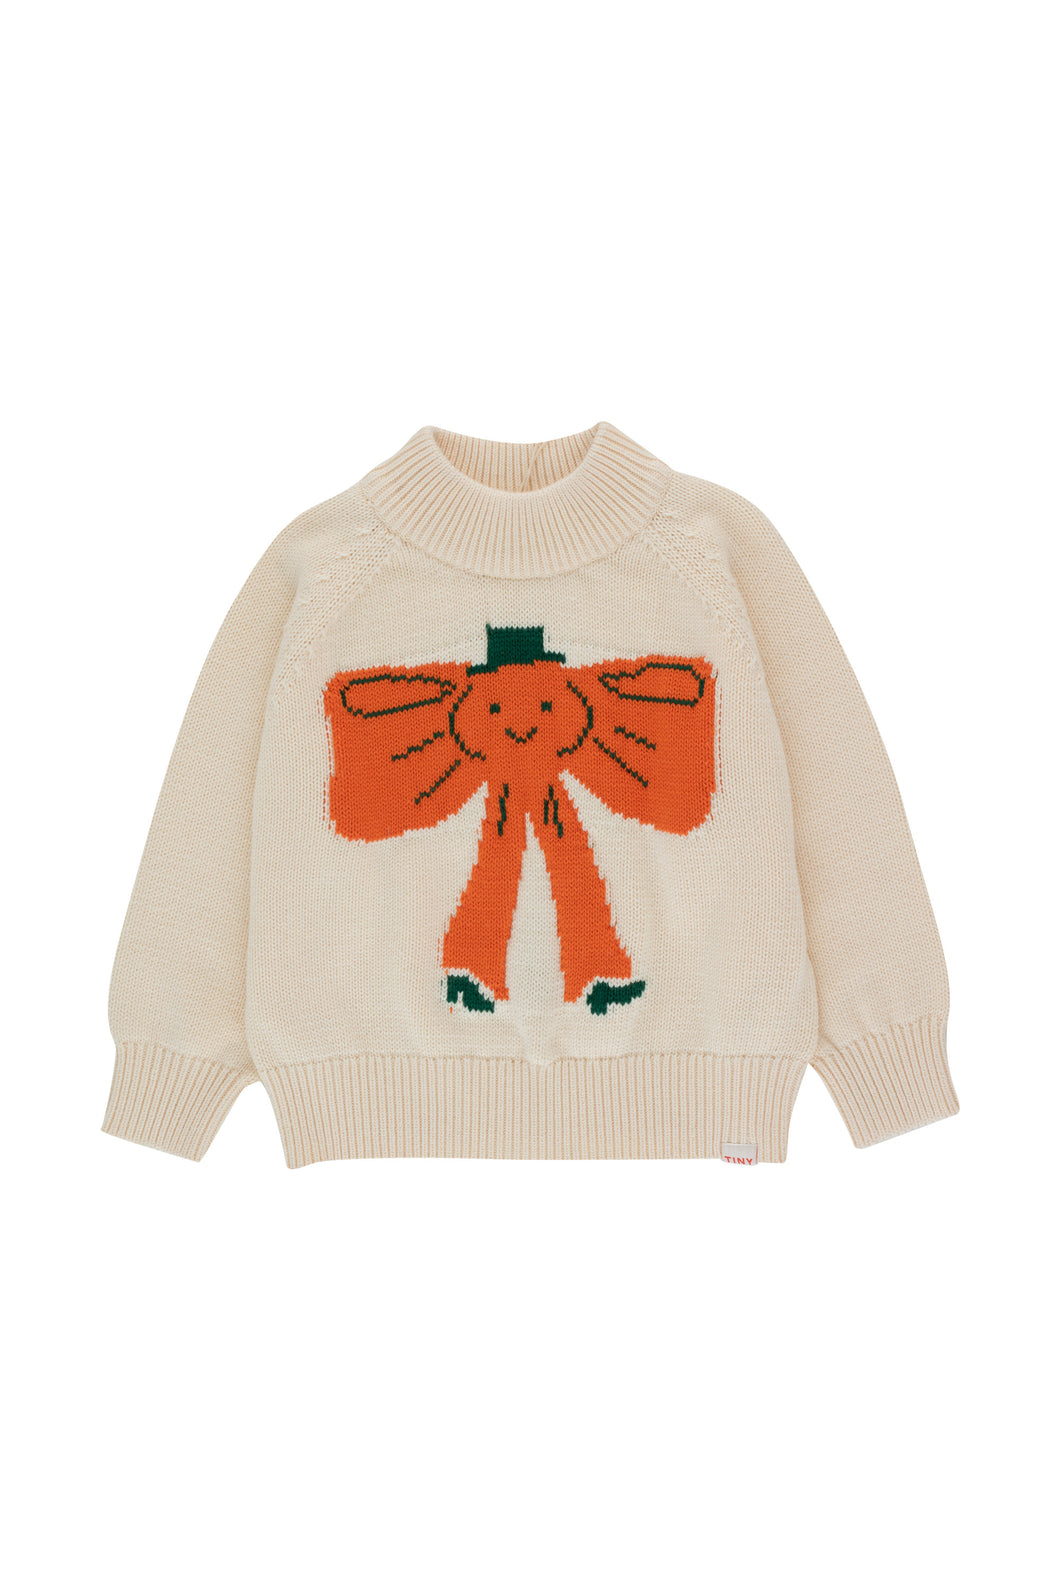 Tinycottons / KID / Bow Mockneck Sweater / Light Cream Melange